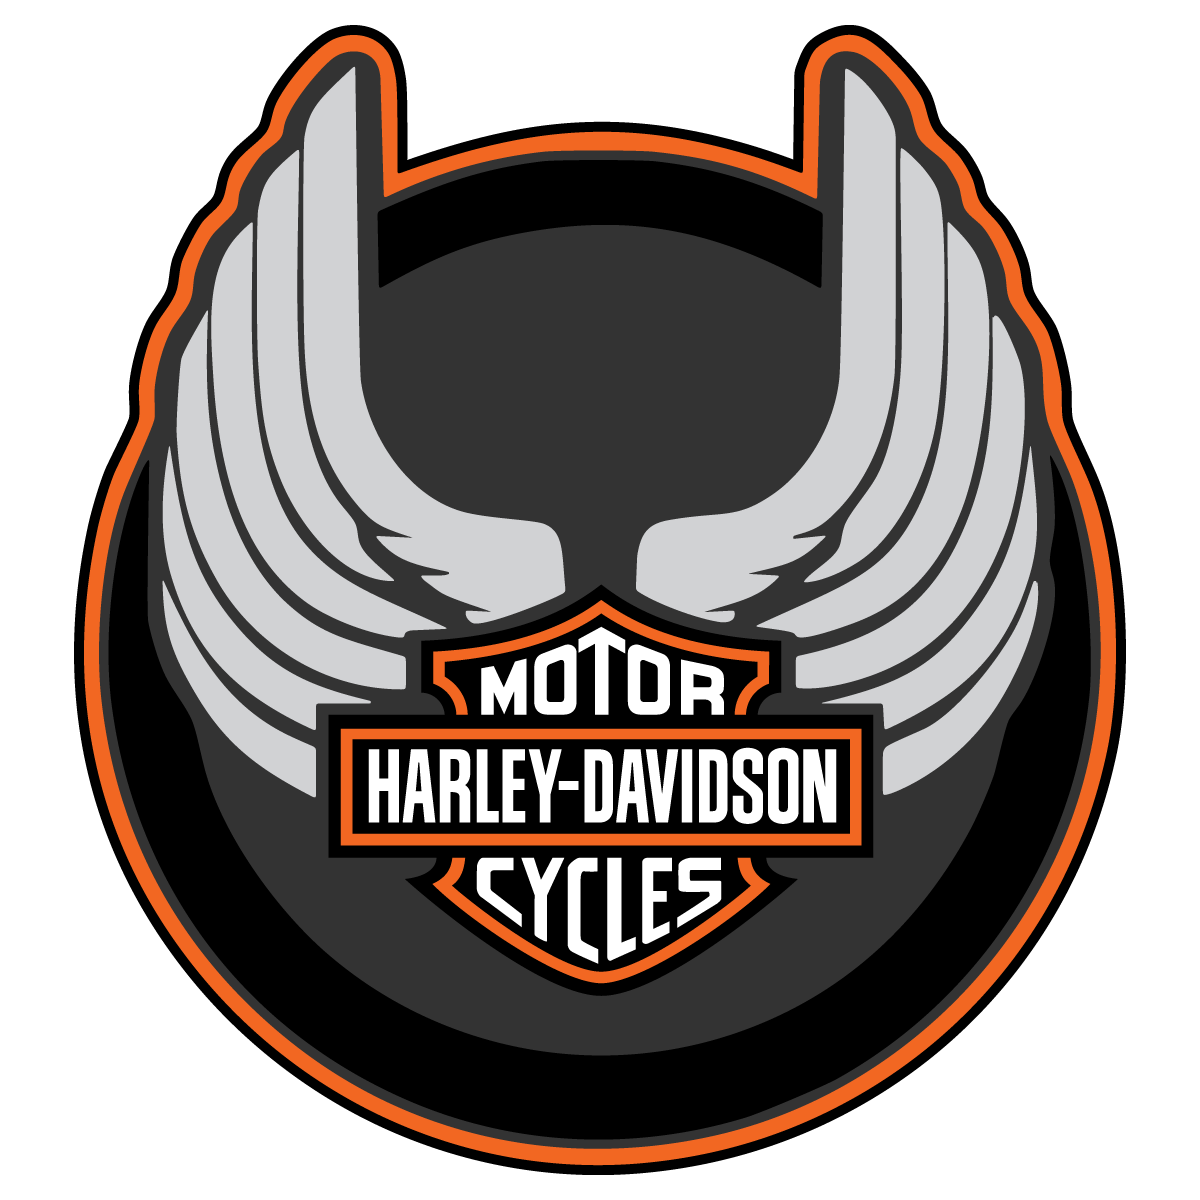 Download Harley Davidson Logo Silhouette at GetDrawings.com | Free for personal use Harley Davidson Logo ...